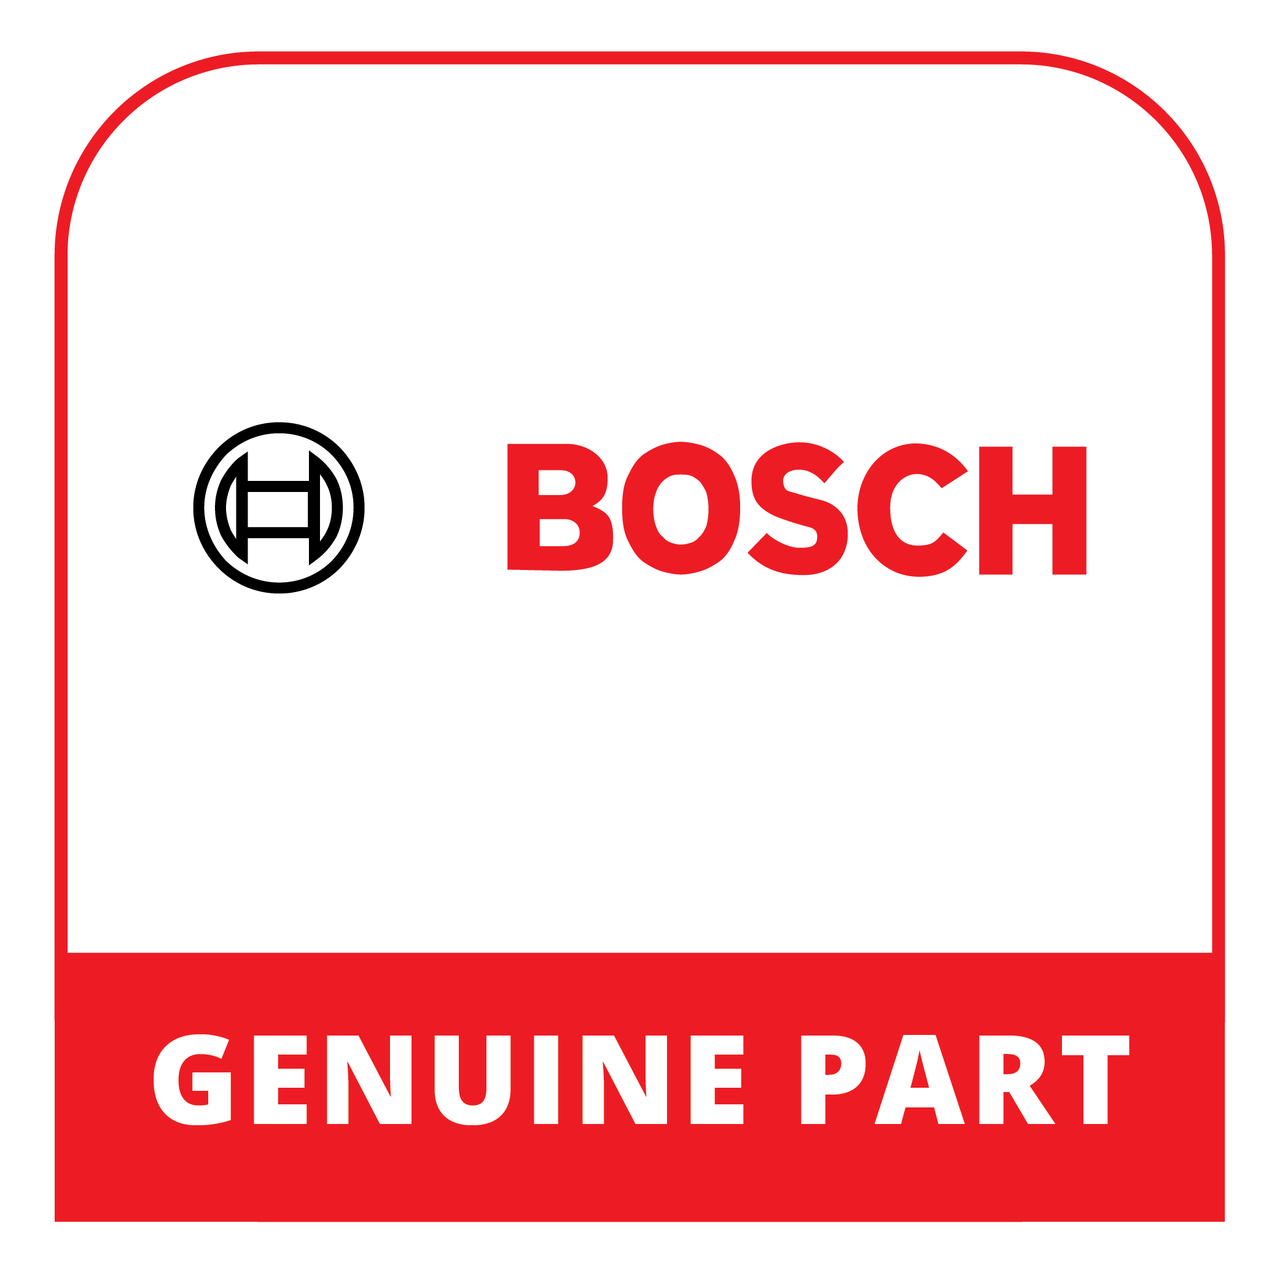 Bosch (Thermador) 20001474 - Panel-Facia - Genuine Bosch (Thermador) Part